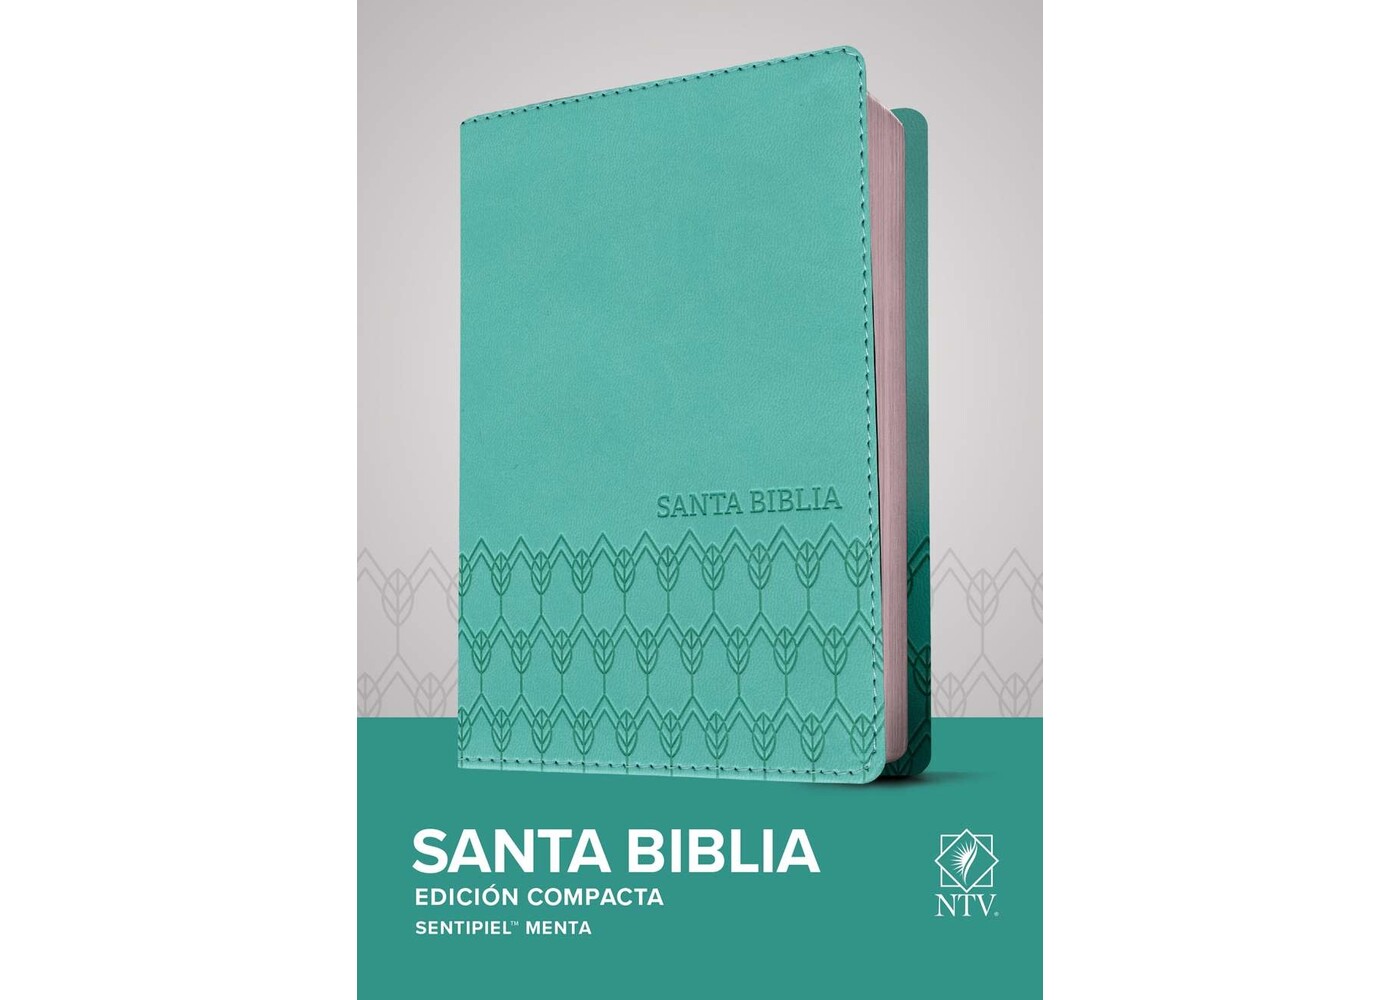 TYNDALE ESPANOL Santa Biblia NTV, Edición compacta, Menta